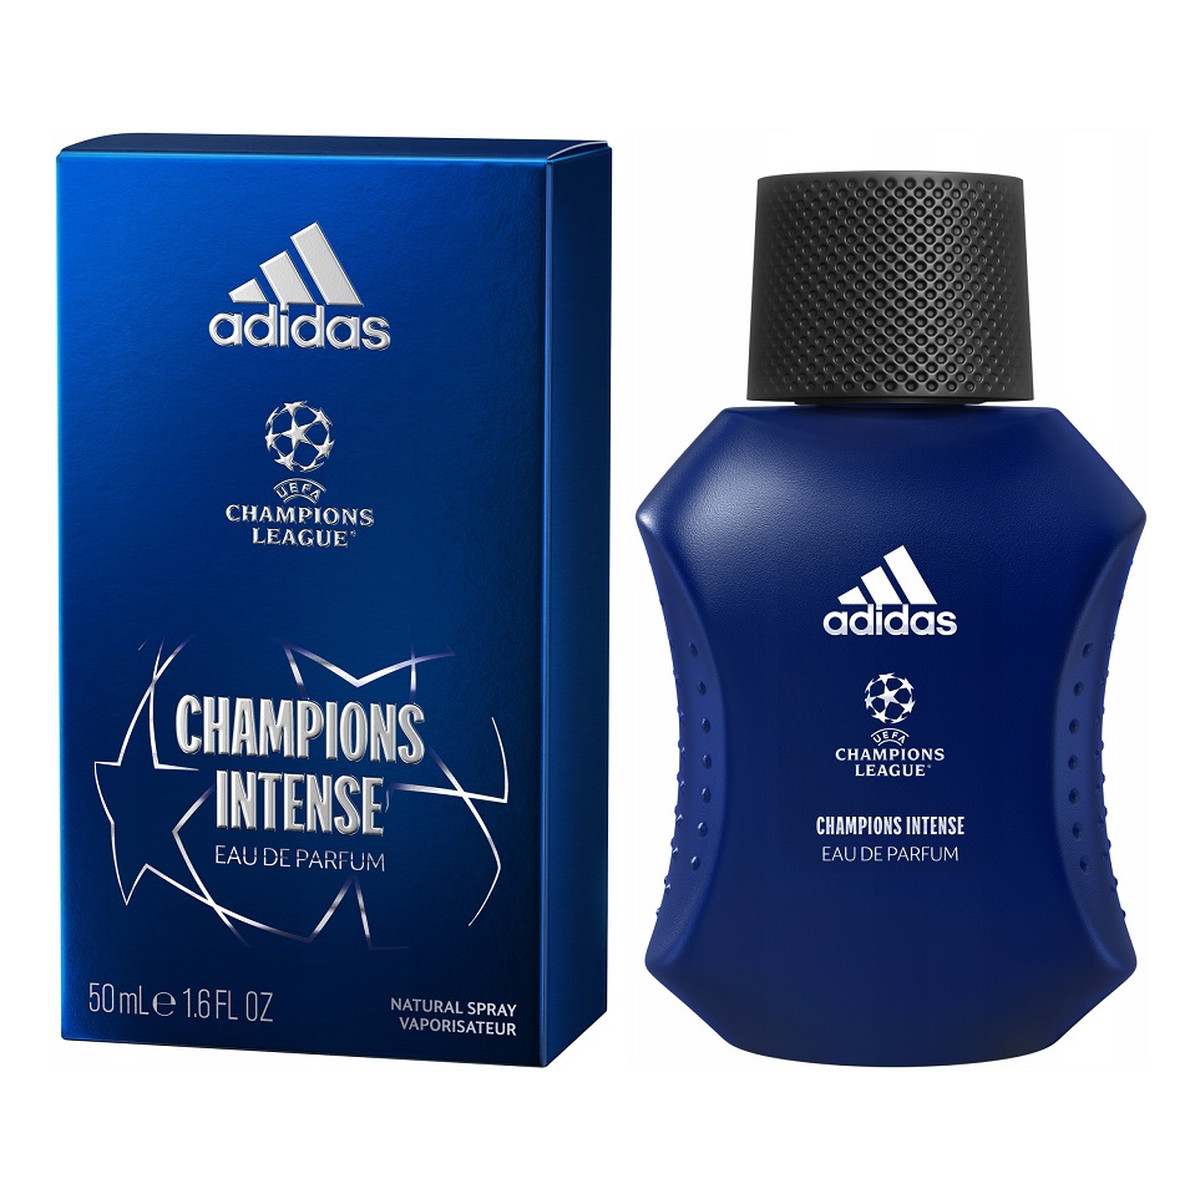 Adidas Uefa Champions League Champions Intense Woda perfumowana spray 50ml